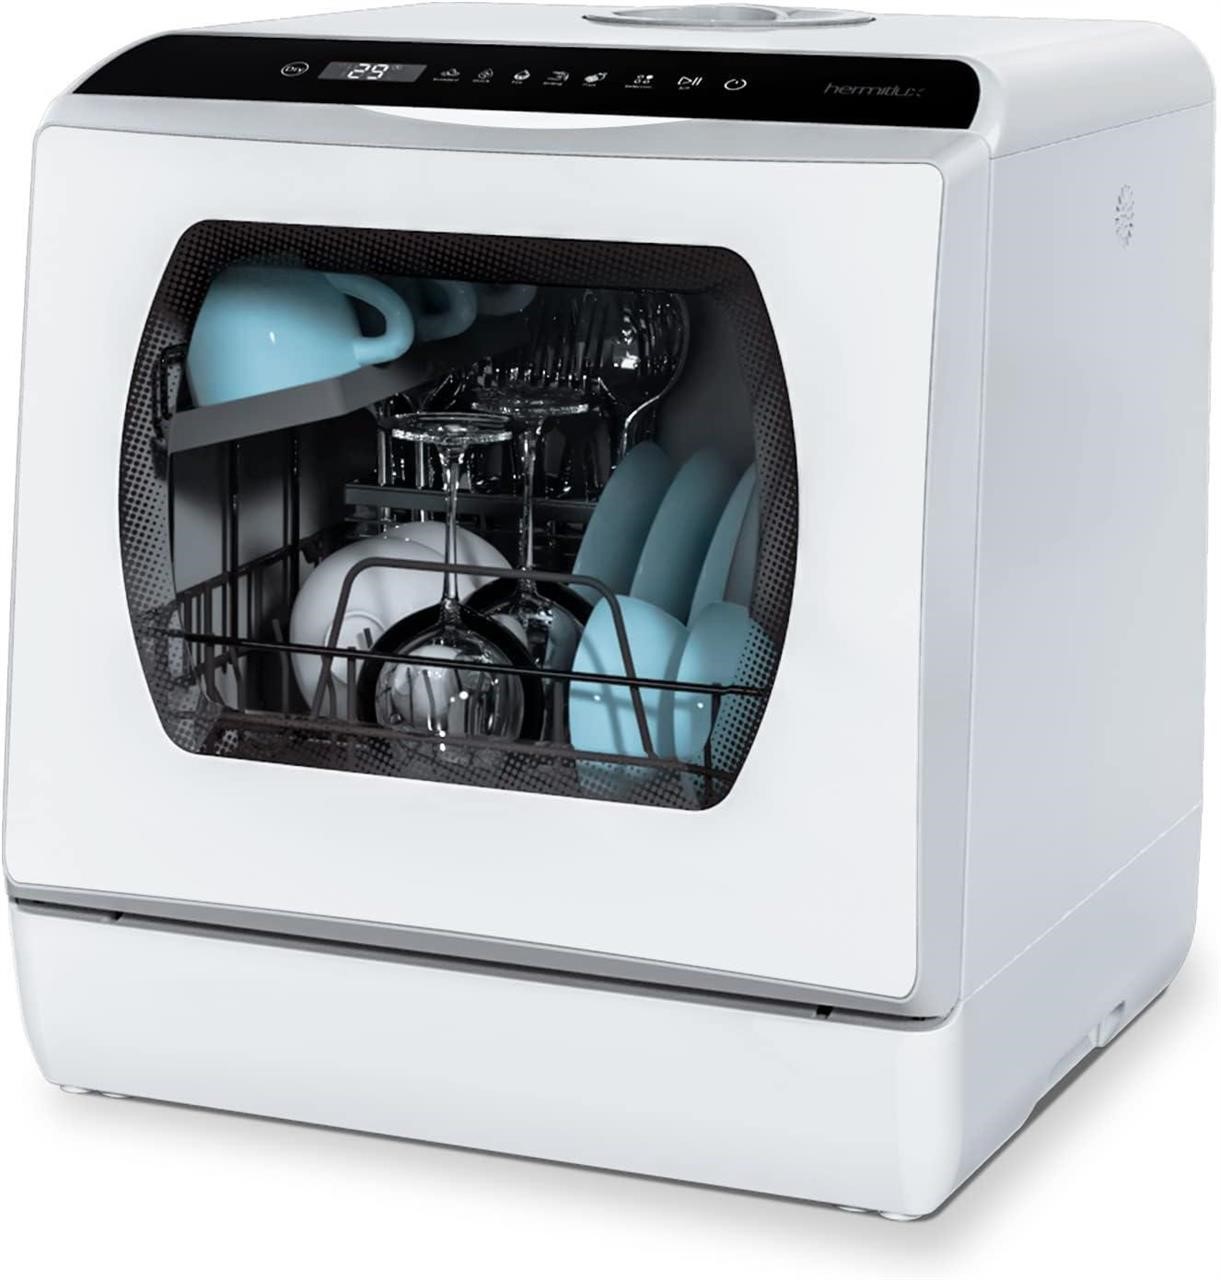 ULN - Hermitlux Portable Countertop Dishwasher